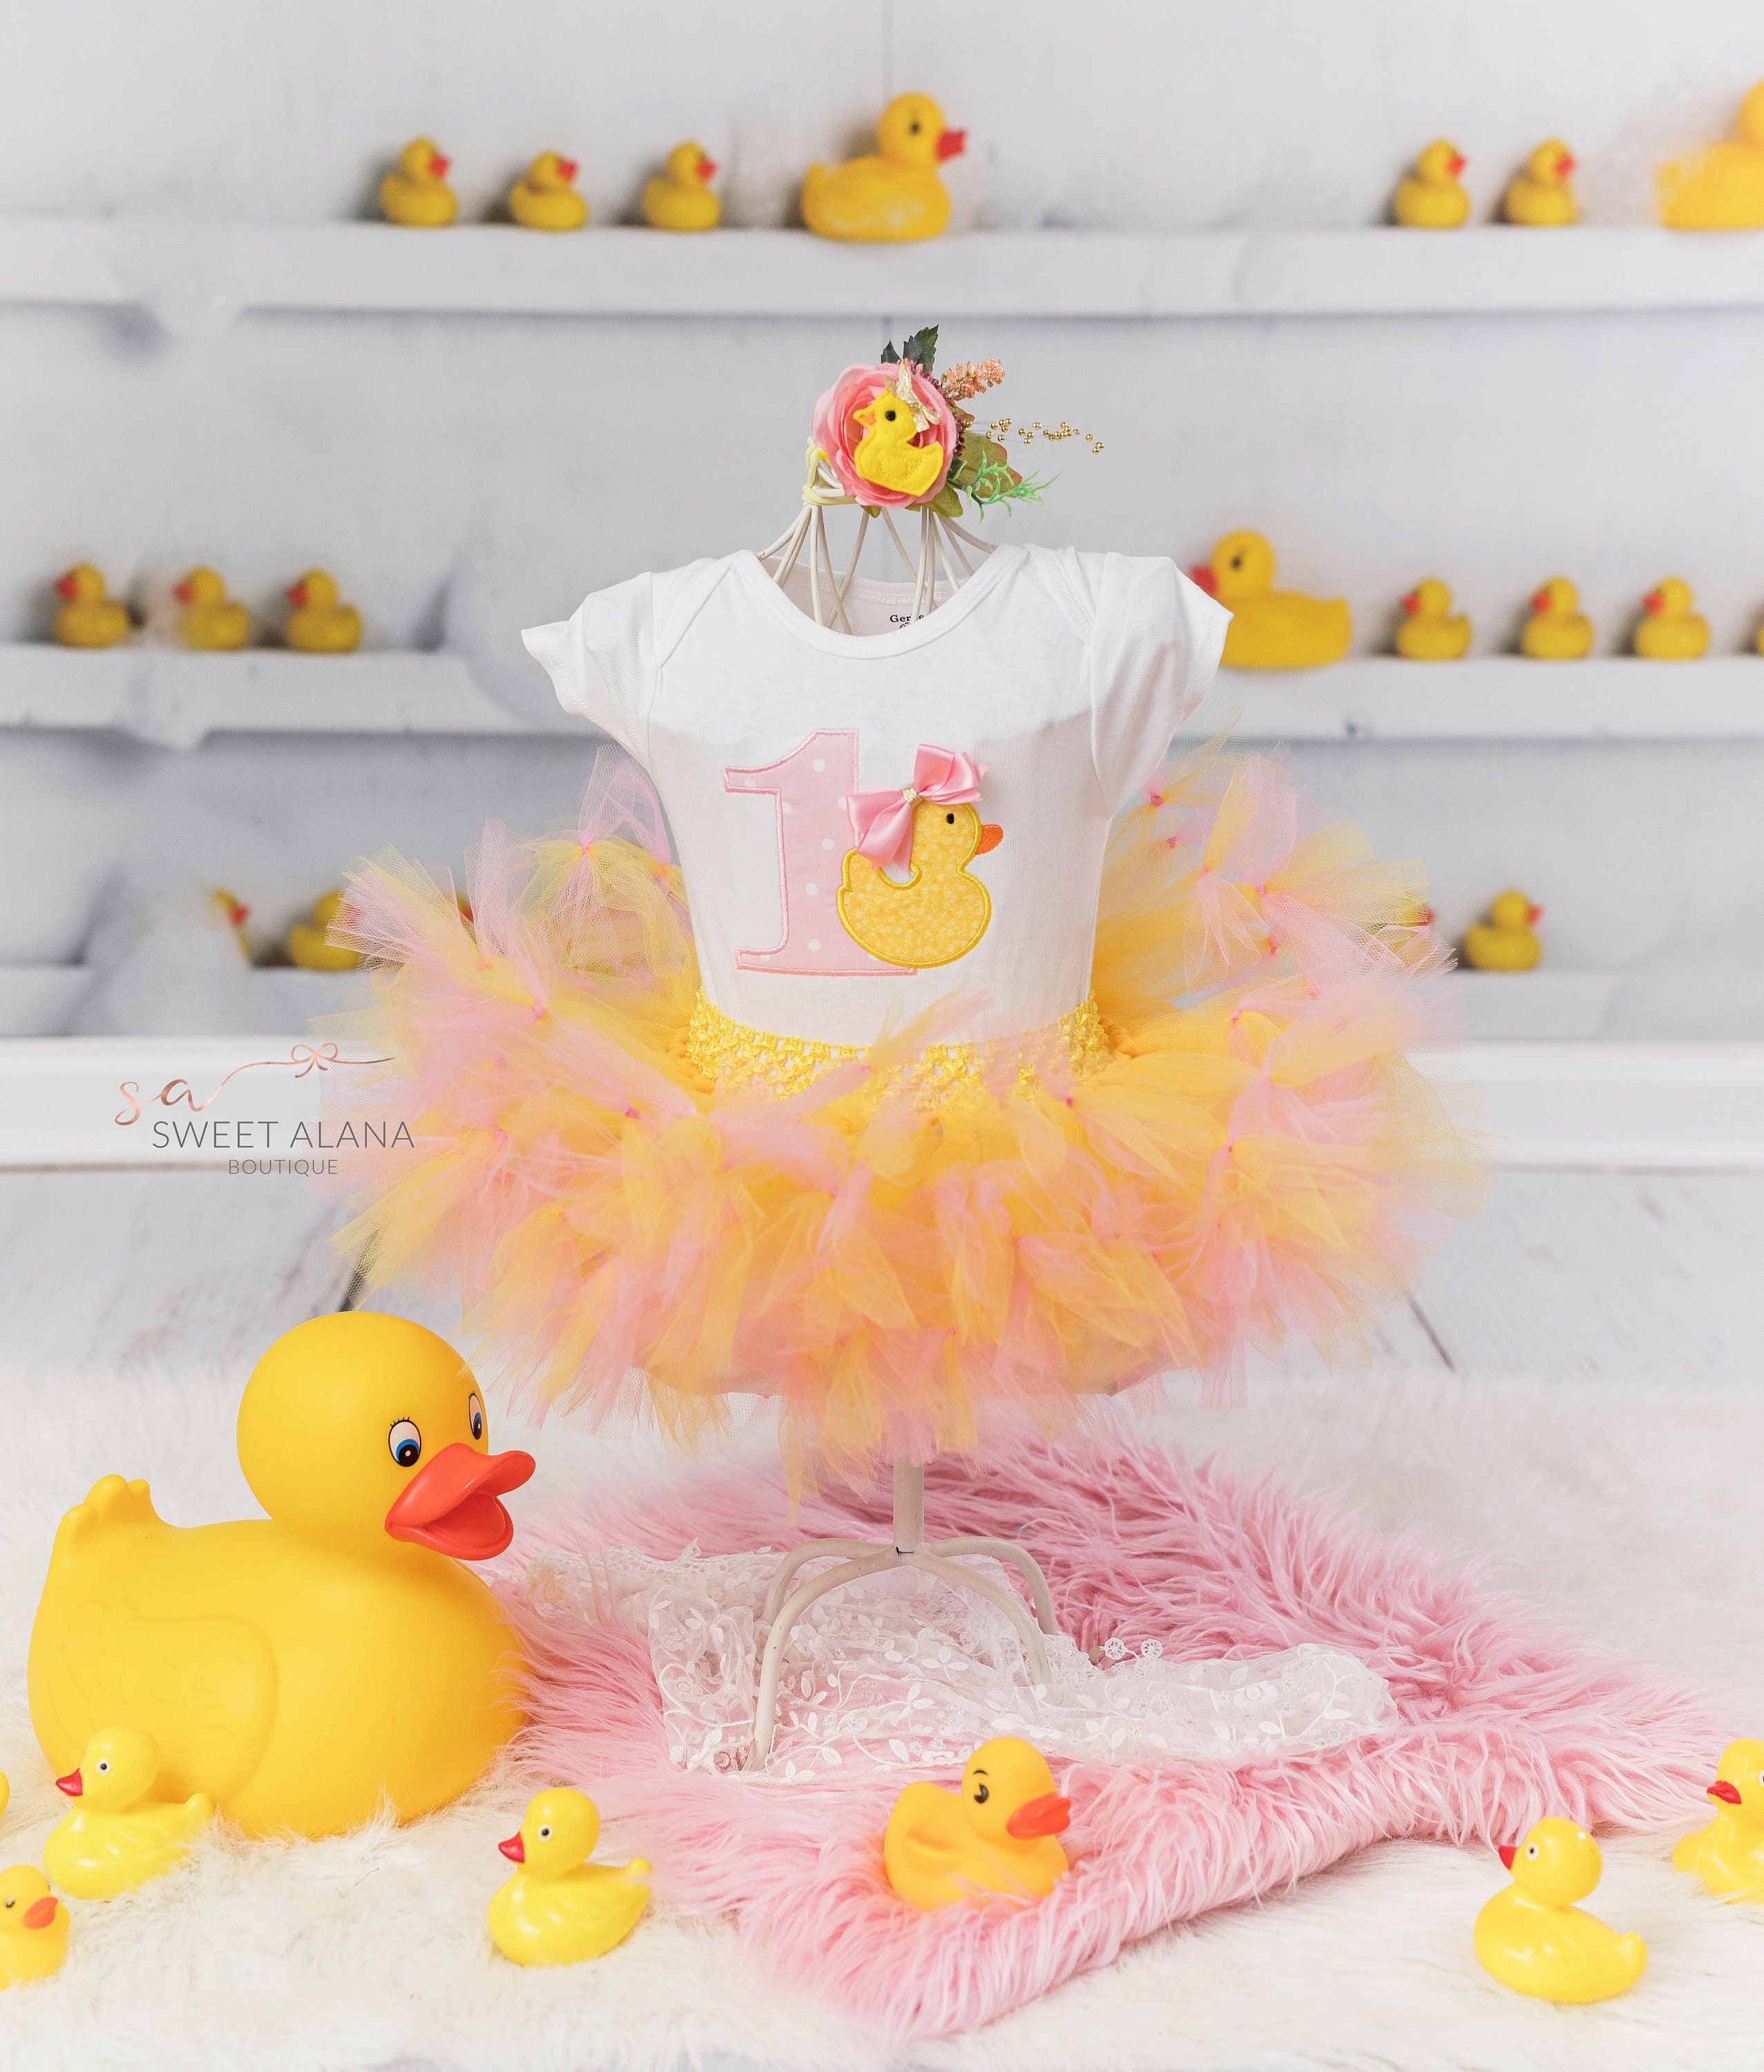 Happy Birthday Girl Rubber Duck  Buy premium rubber ducks online - world  wide delivery!